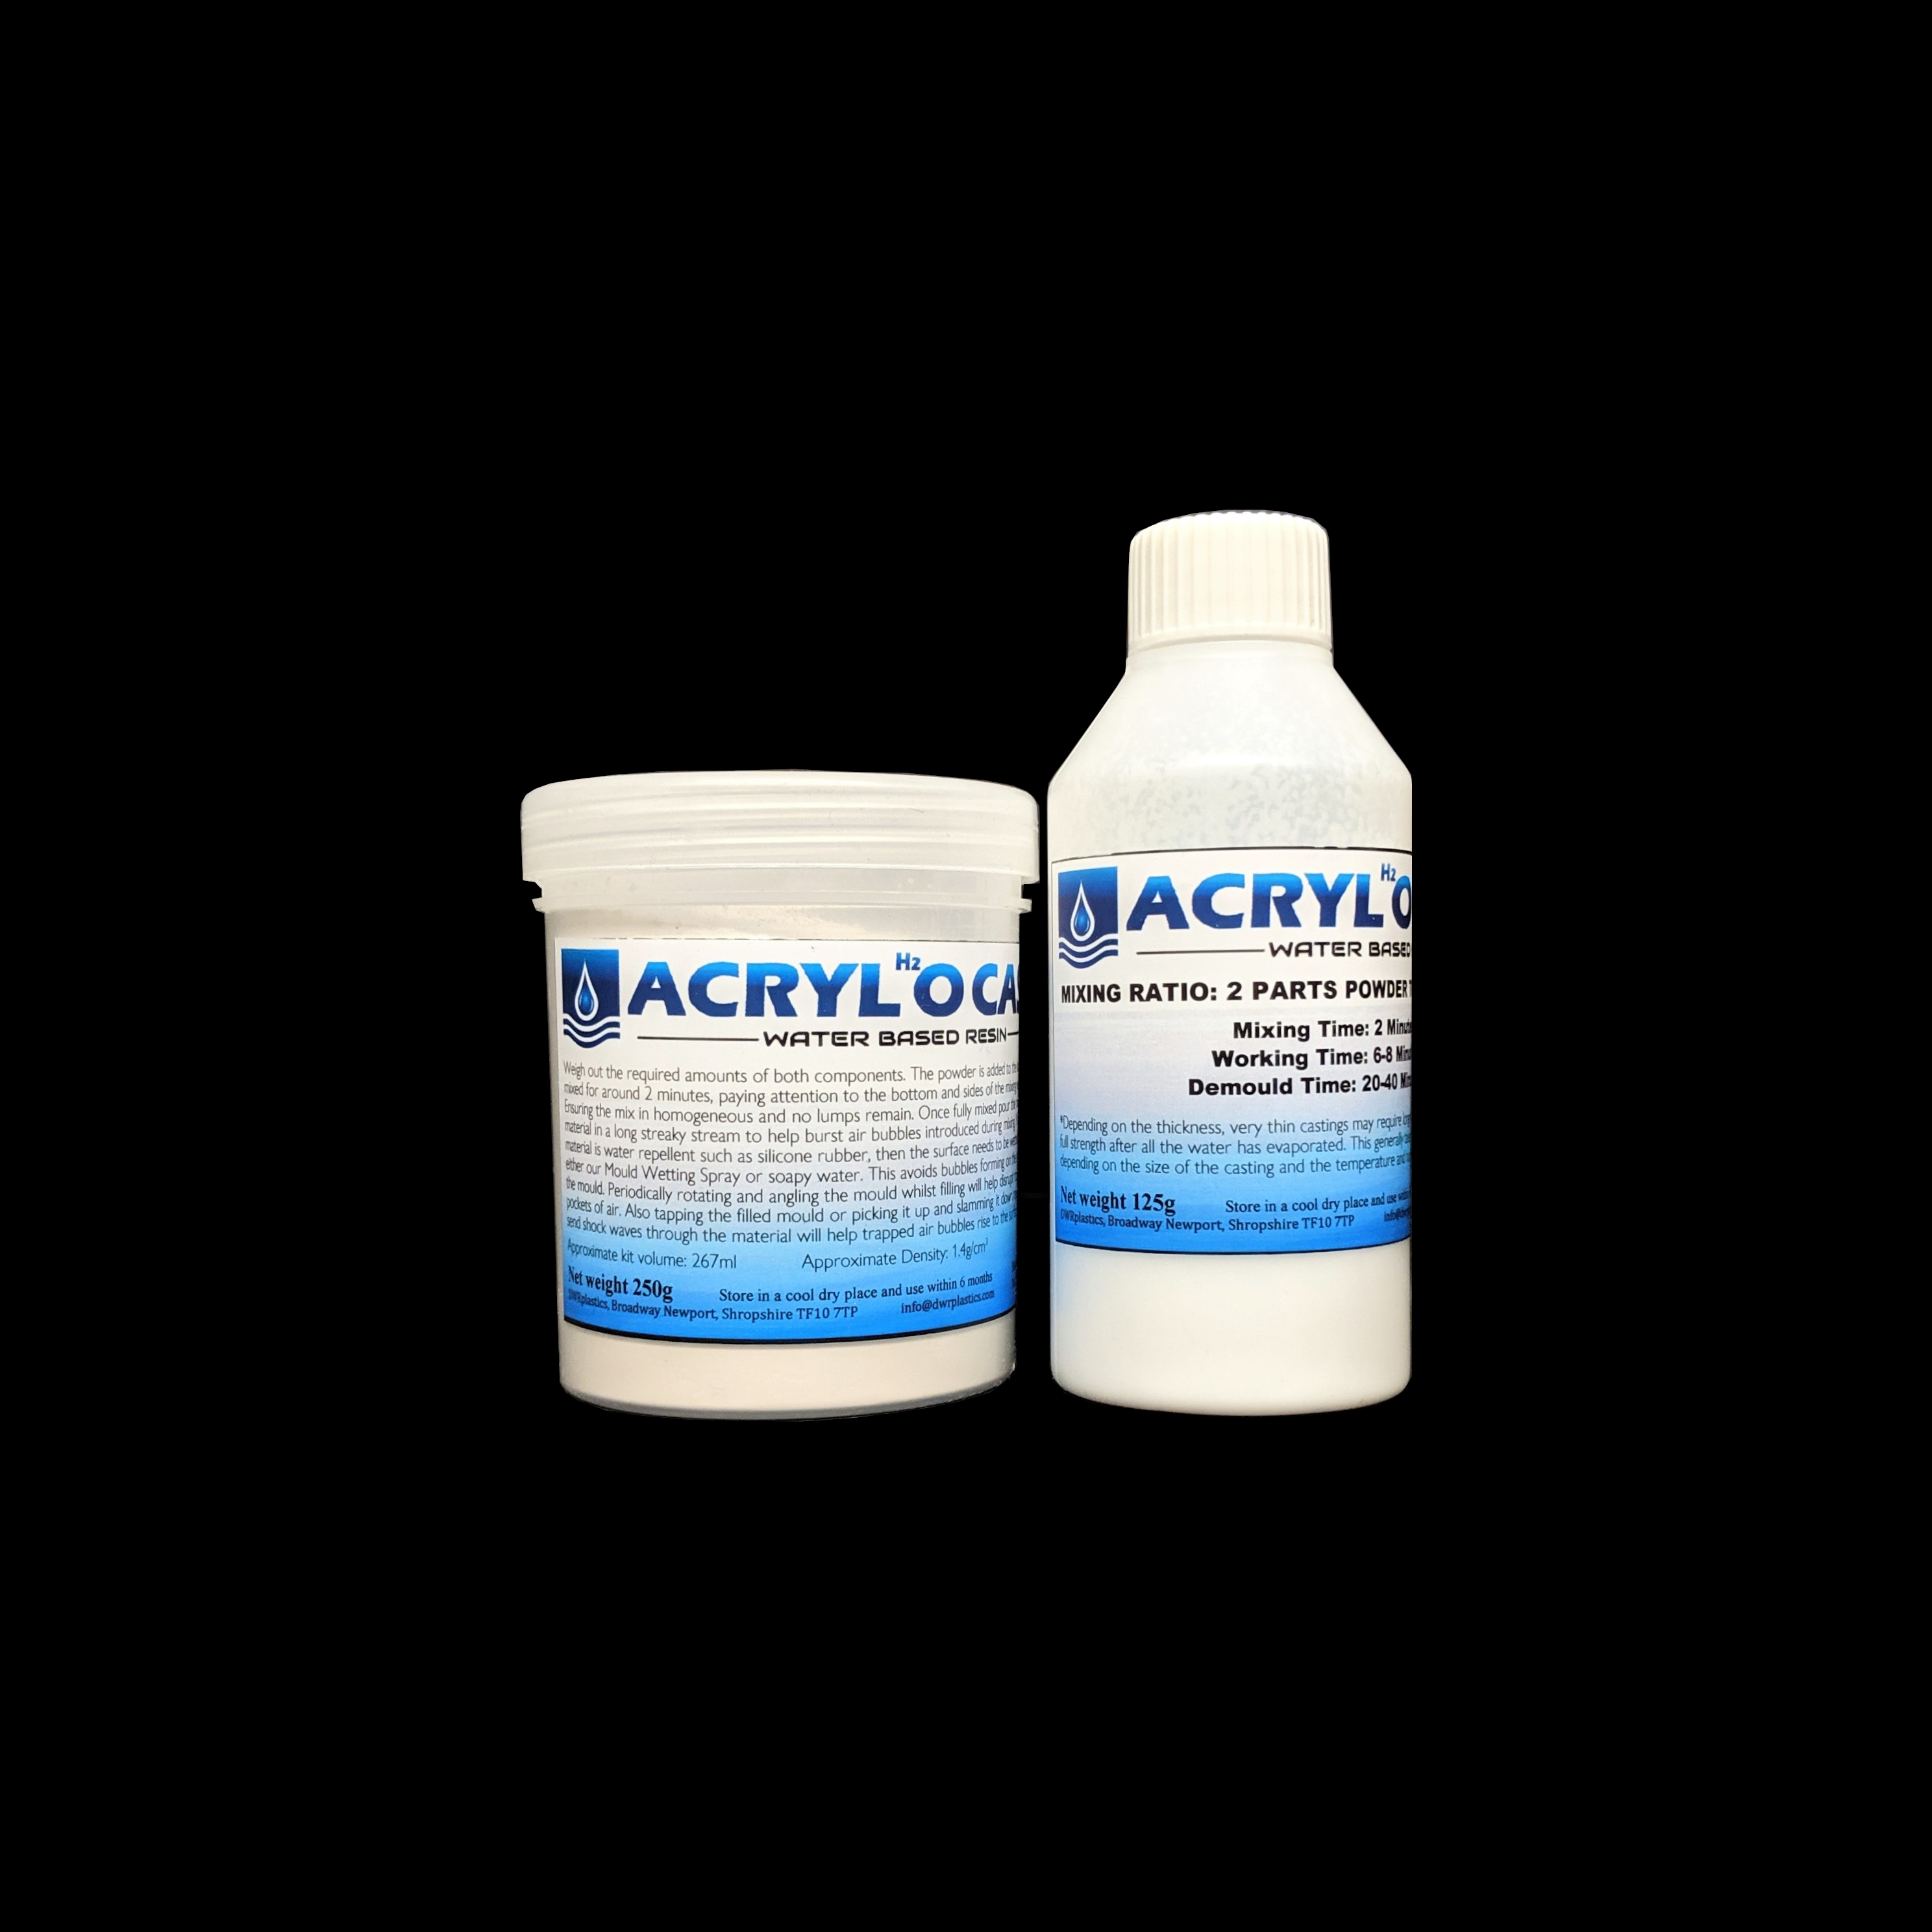 Acrylocast Water Based Acrylic Resin 375g kit